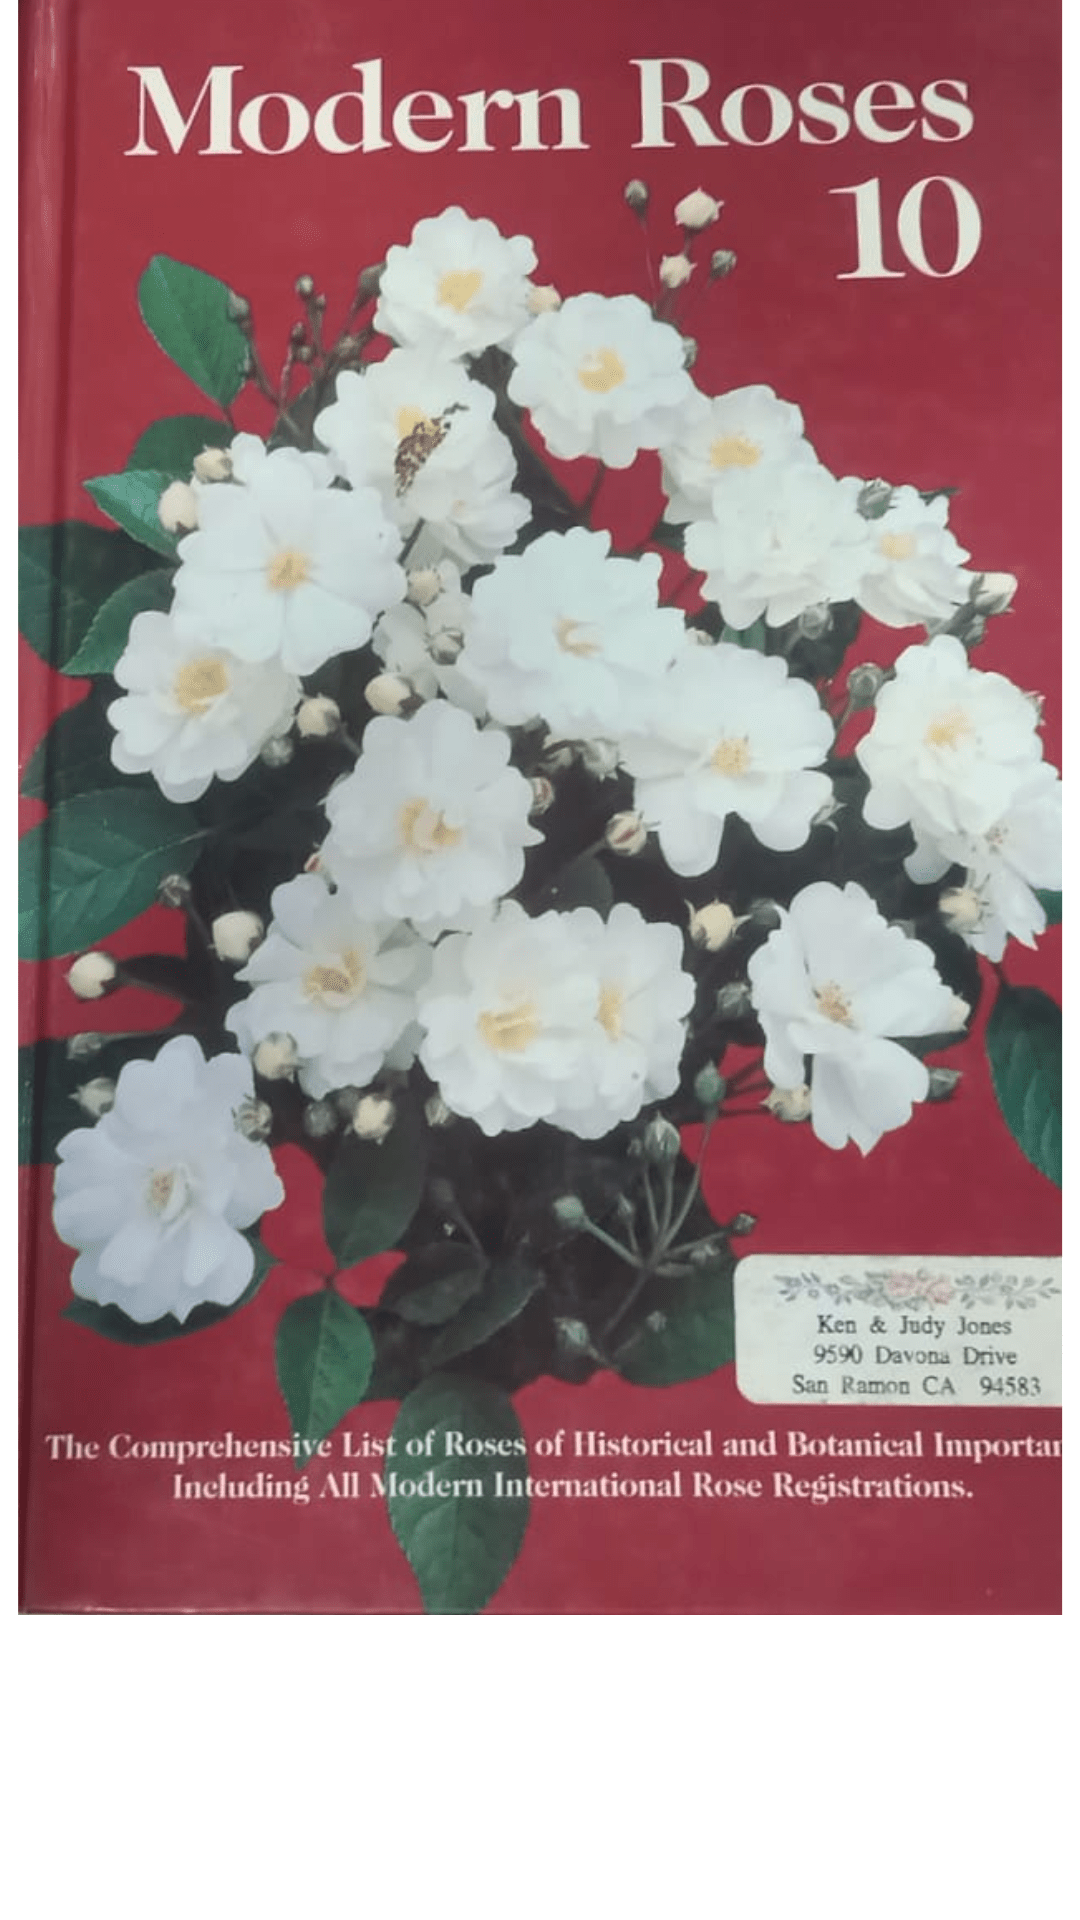 Modern Roses 10: The Comprehensive List of Roses of Historical and Botanical Importance Including All Modern International Rose Registrations